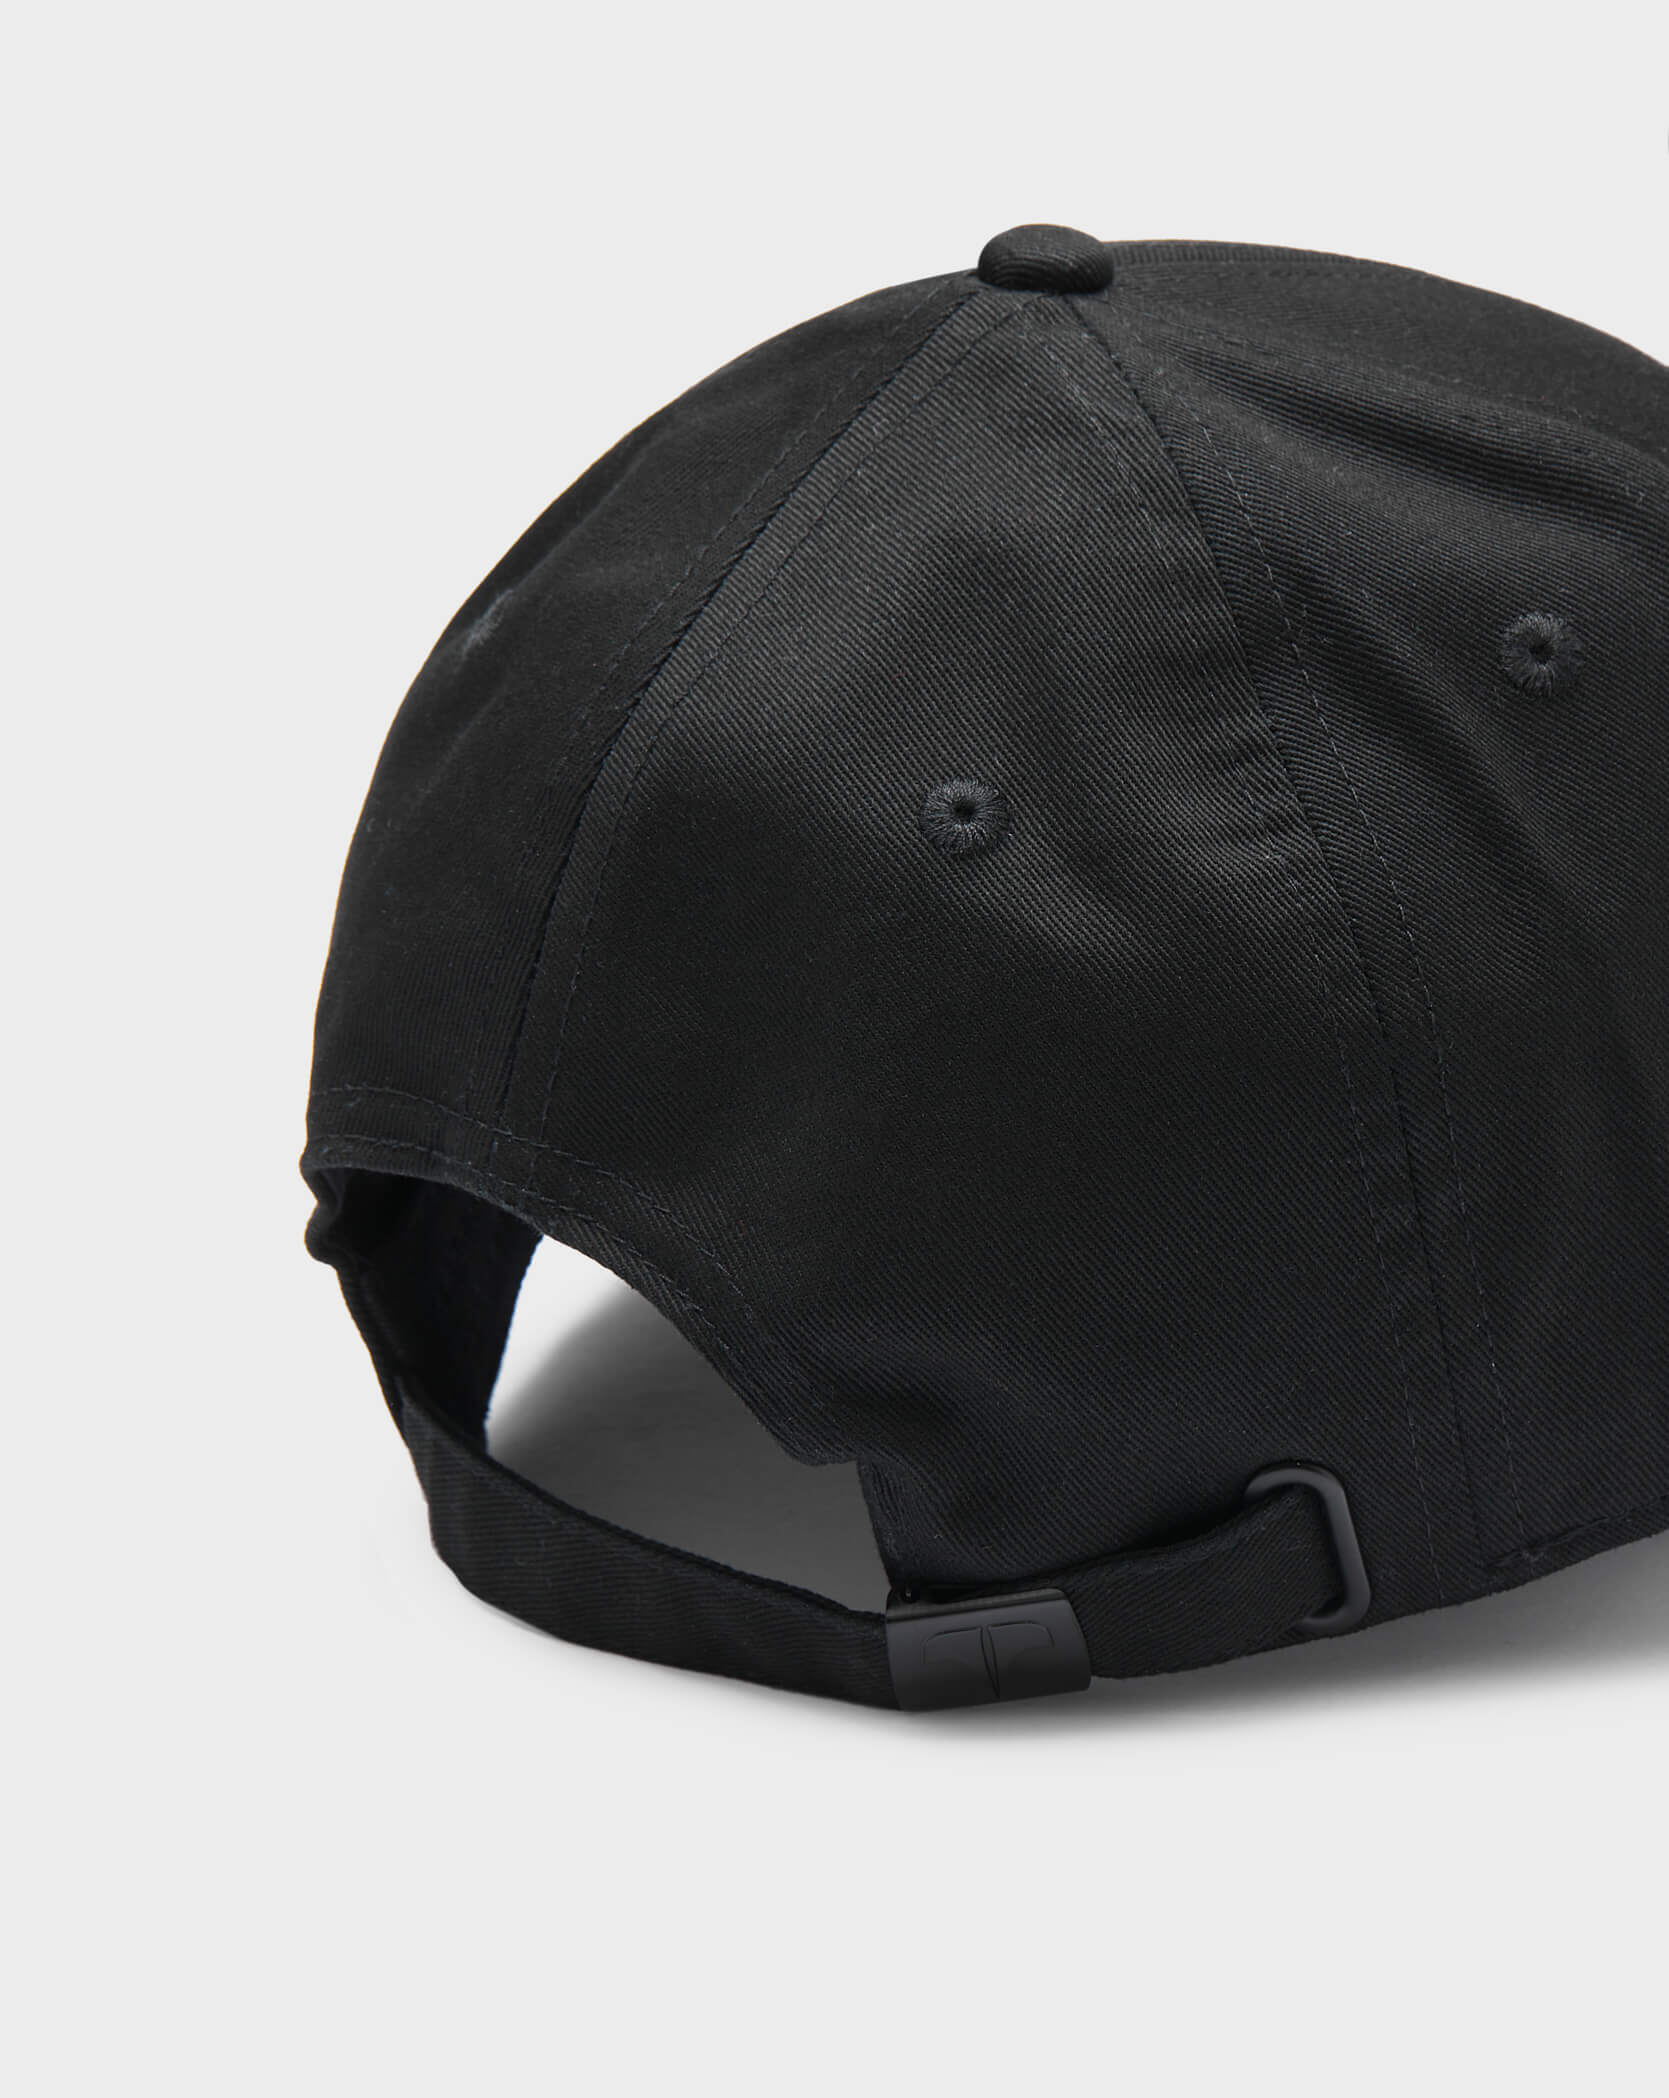 Twinzz black pitcher cap with black logo strap